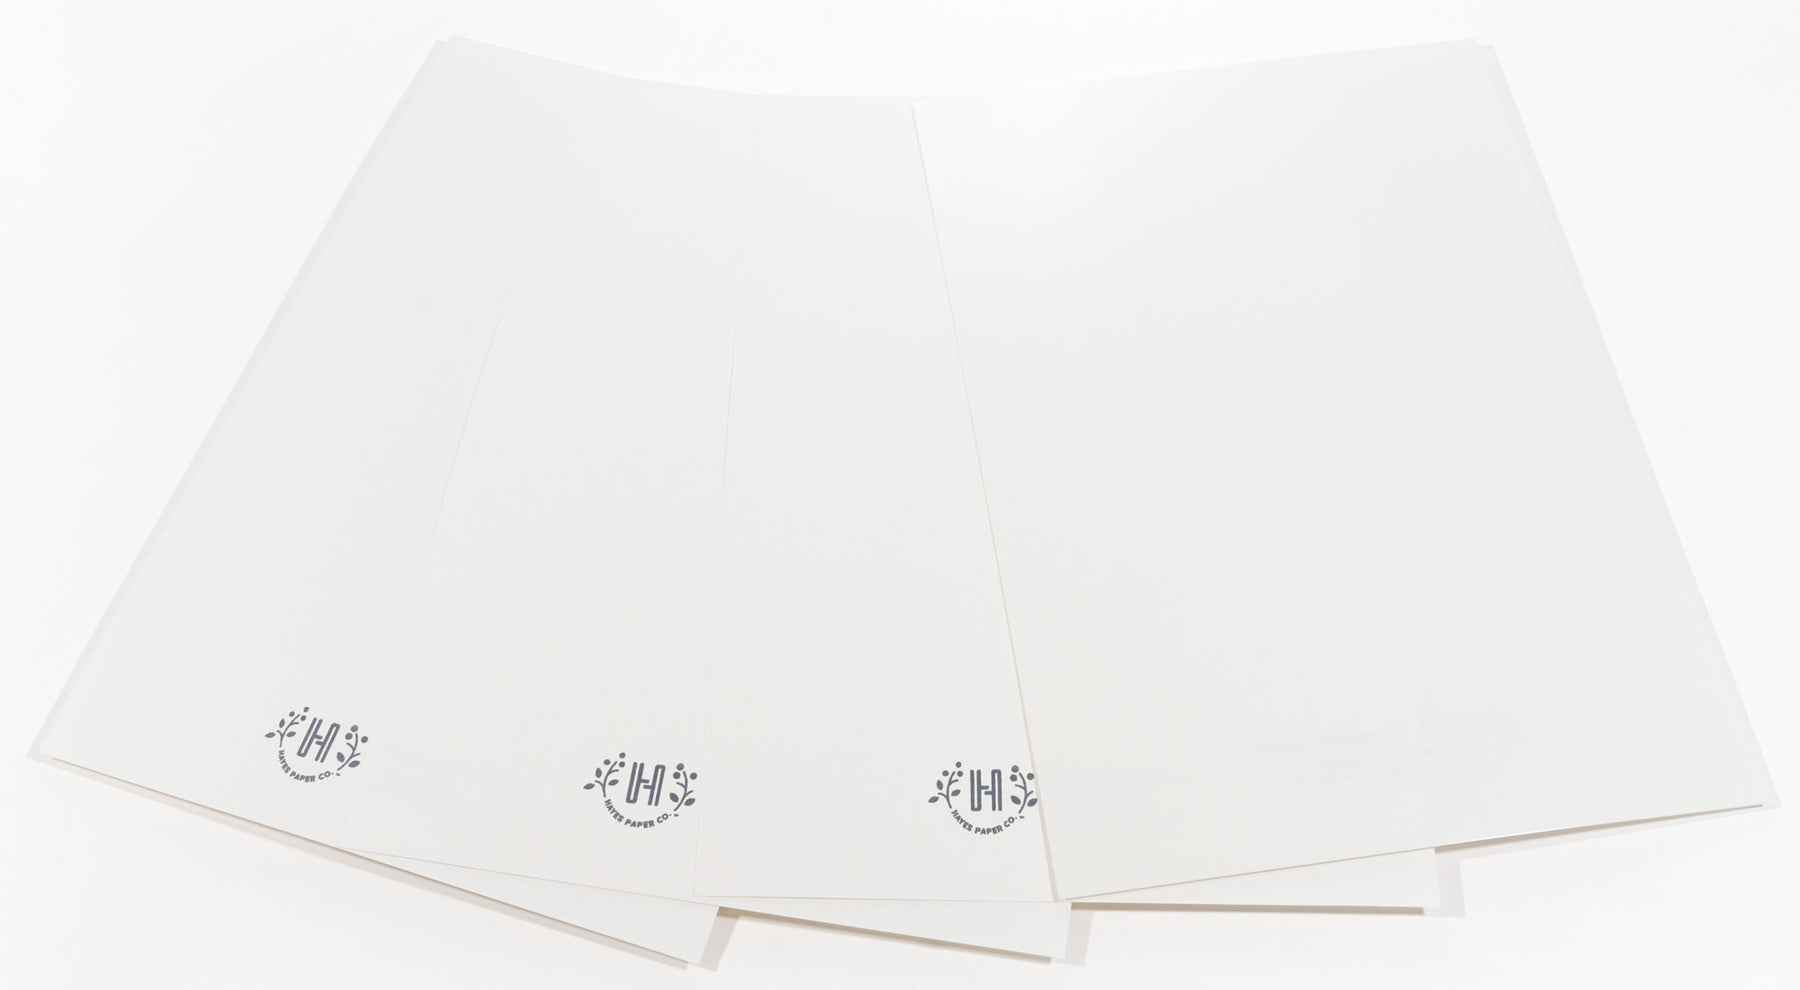 LV (Louis Vuitton) Pen Wraps - Clear/White Waterslide Paper Ready